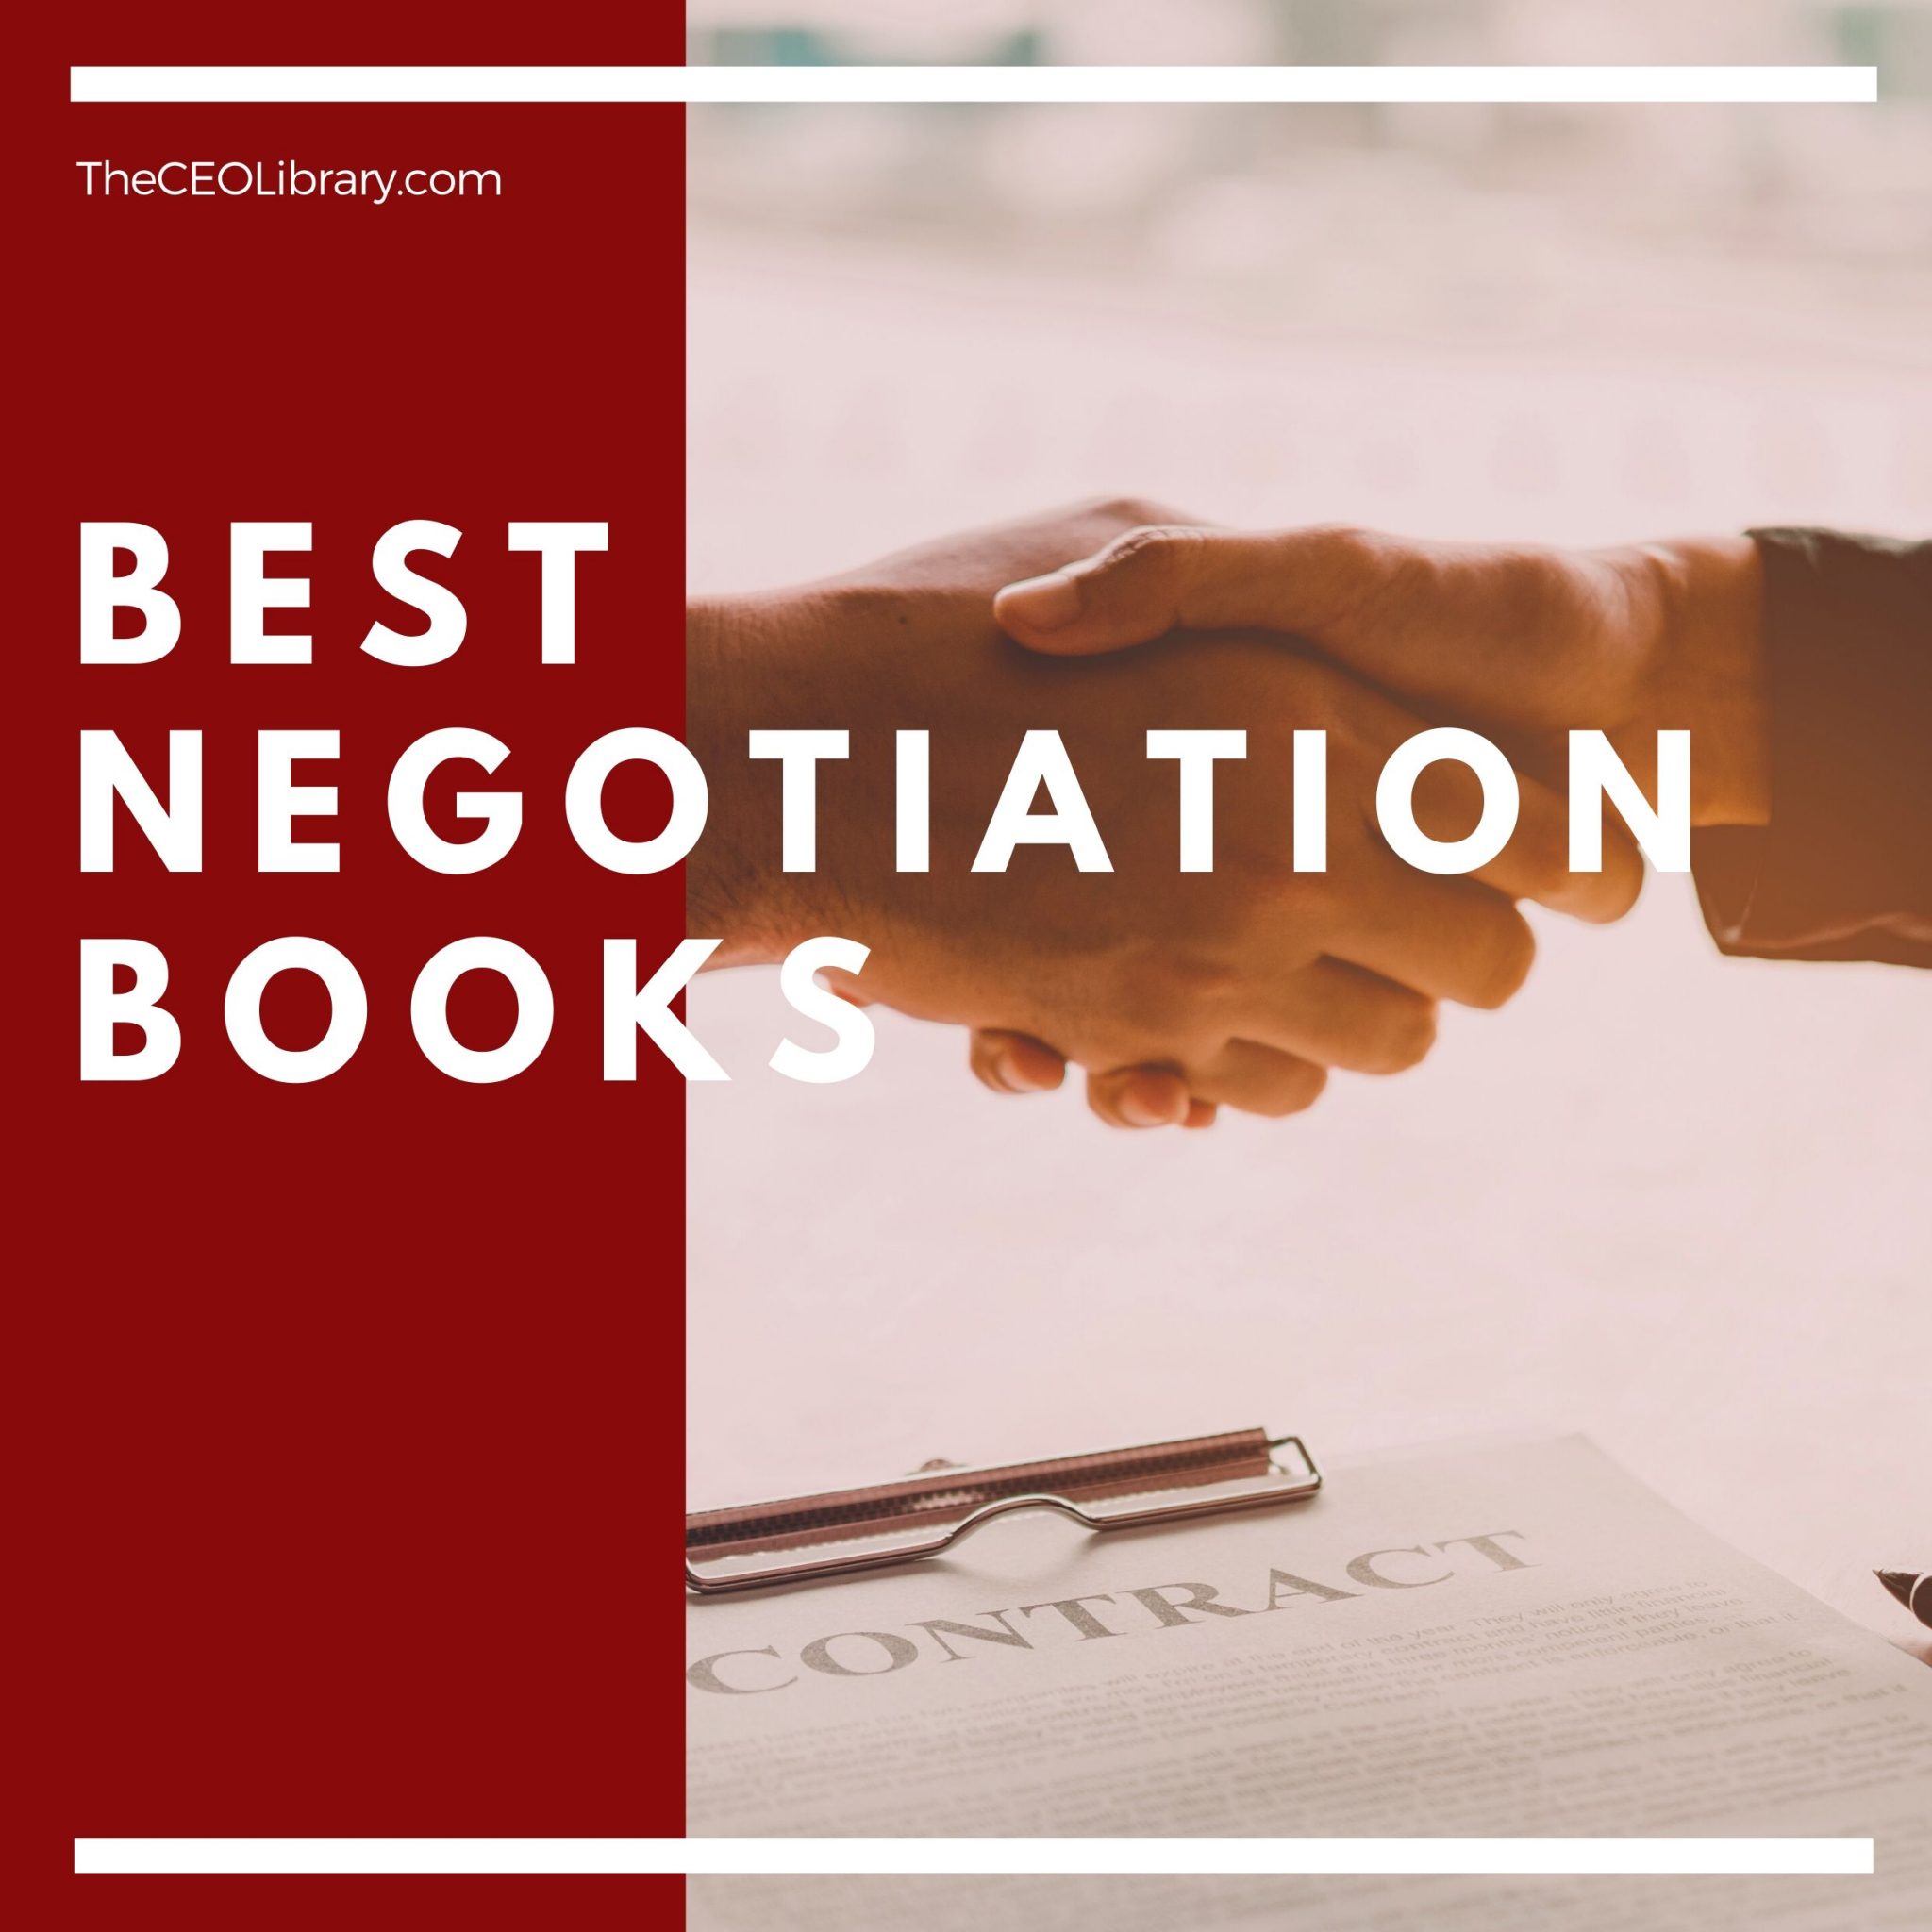 Best Negotiation Books for a Better Business Mindset